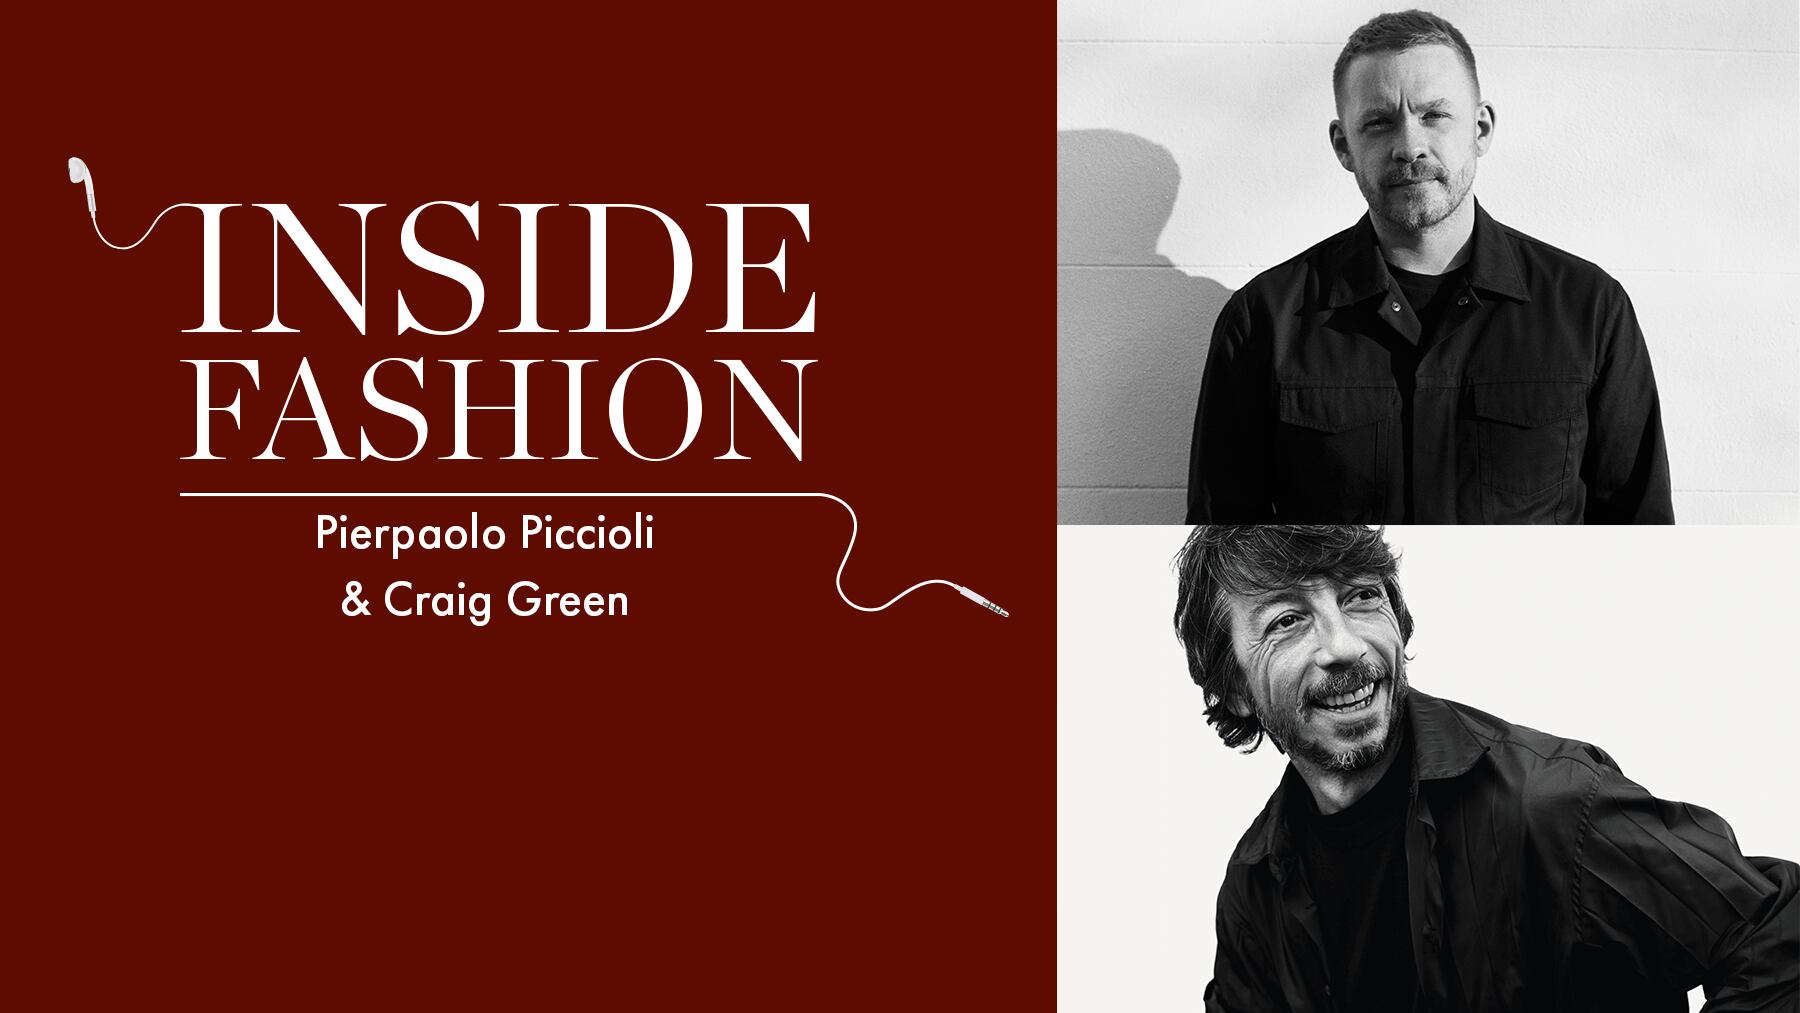 Pierpaolo Piccioli and Craig Green.